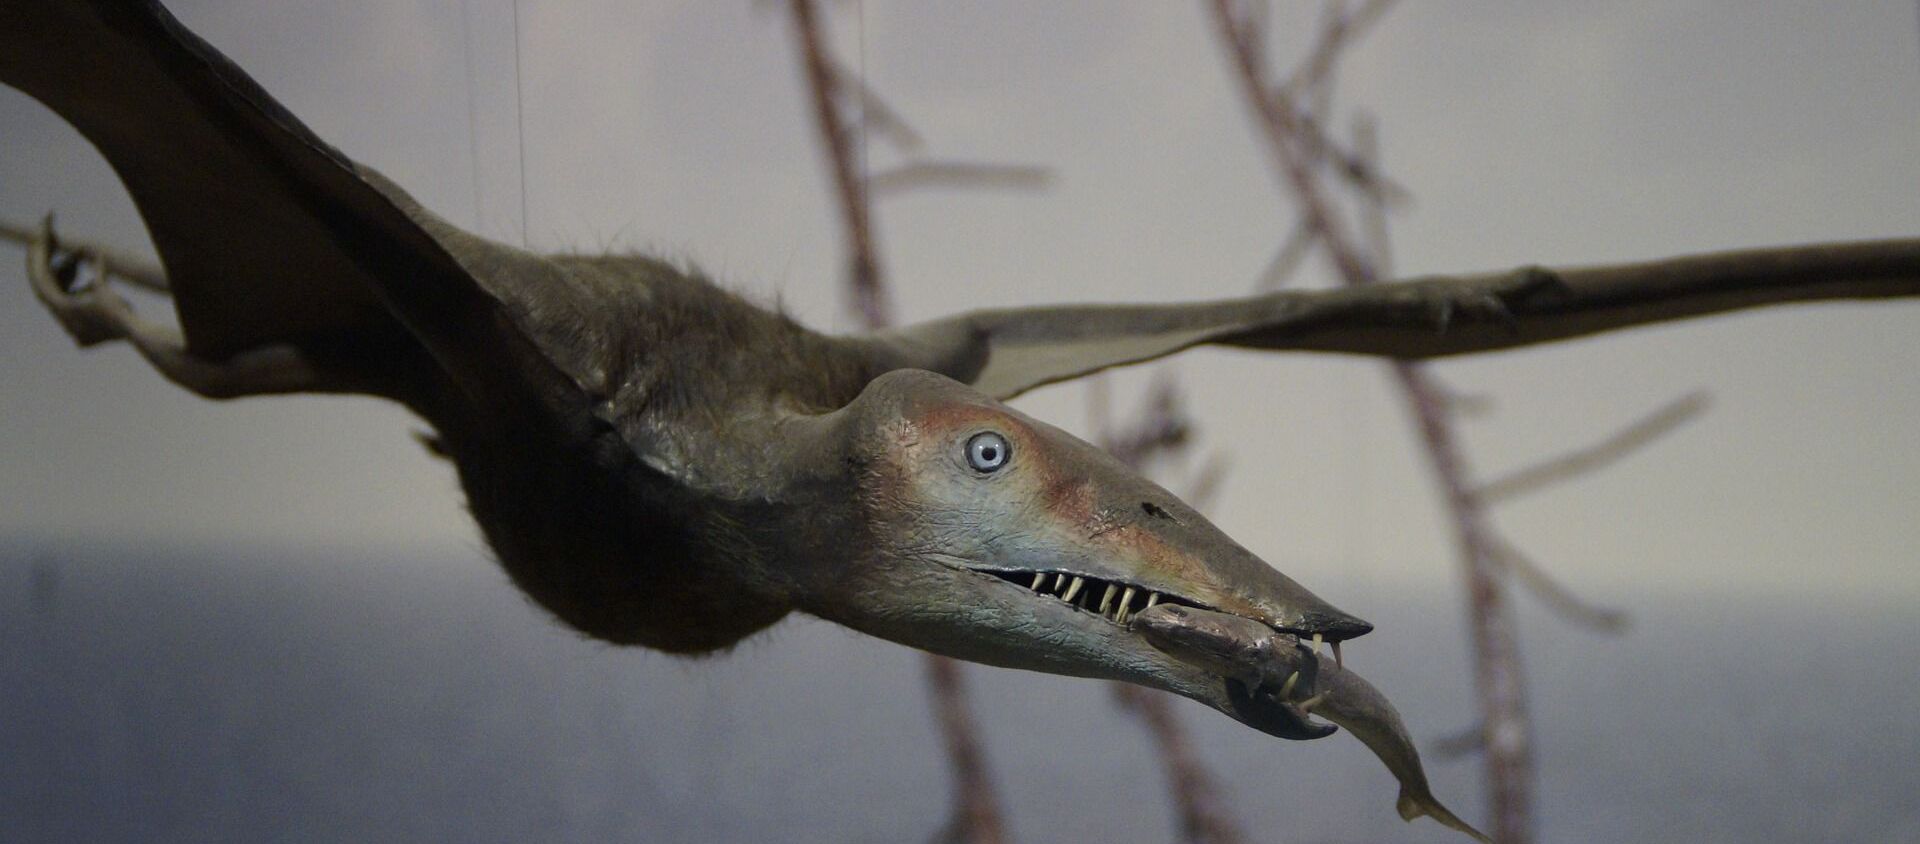 World's biggest Jurassic-era pterodactyl discovered on Isle of Skye